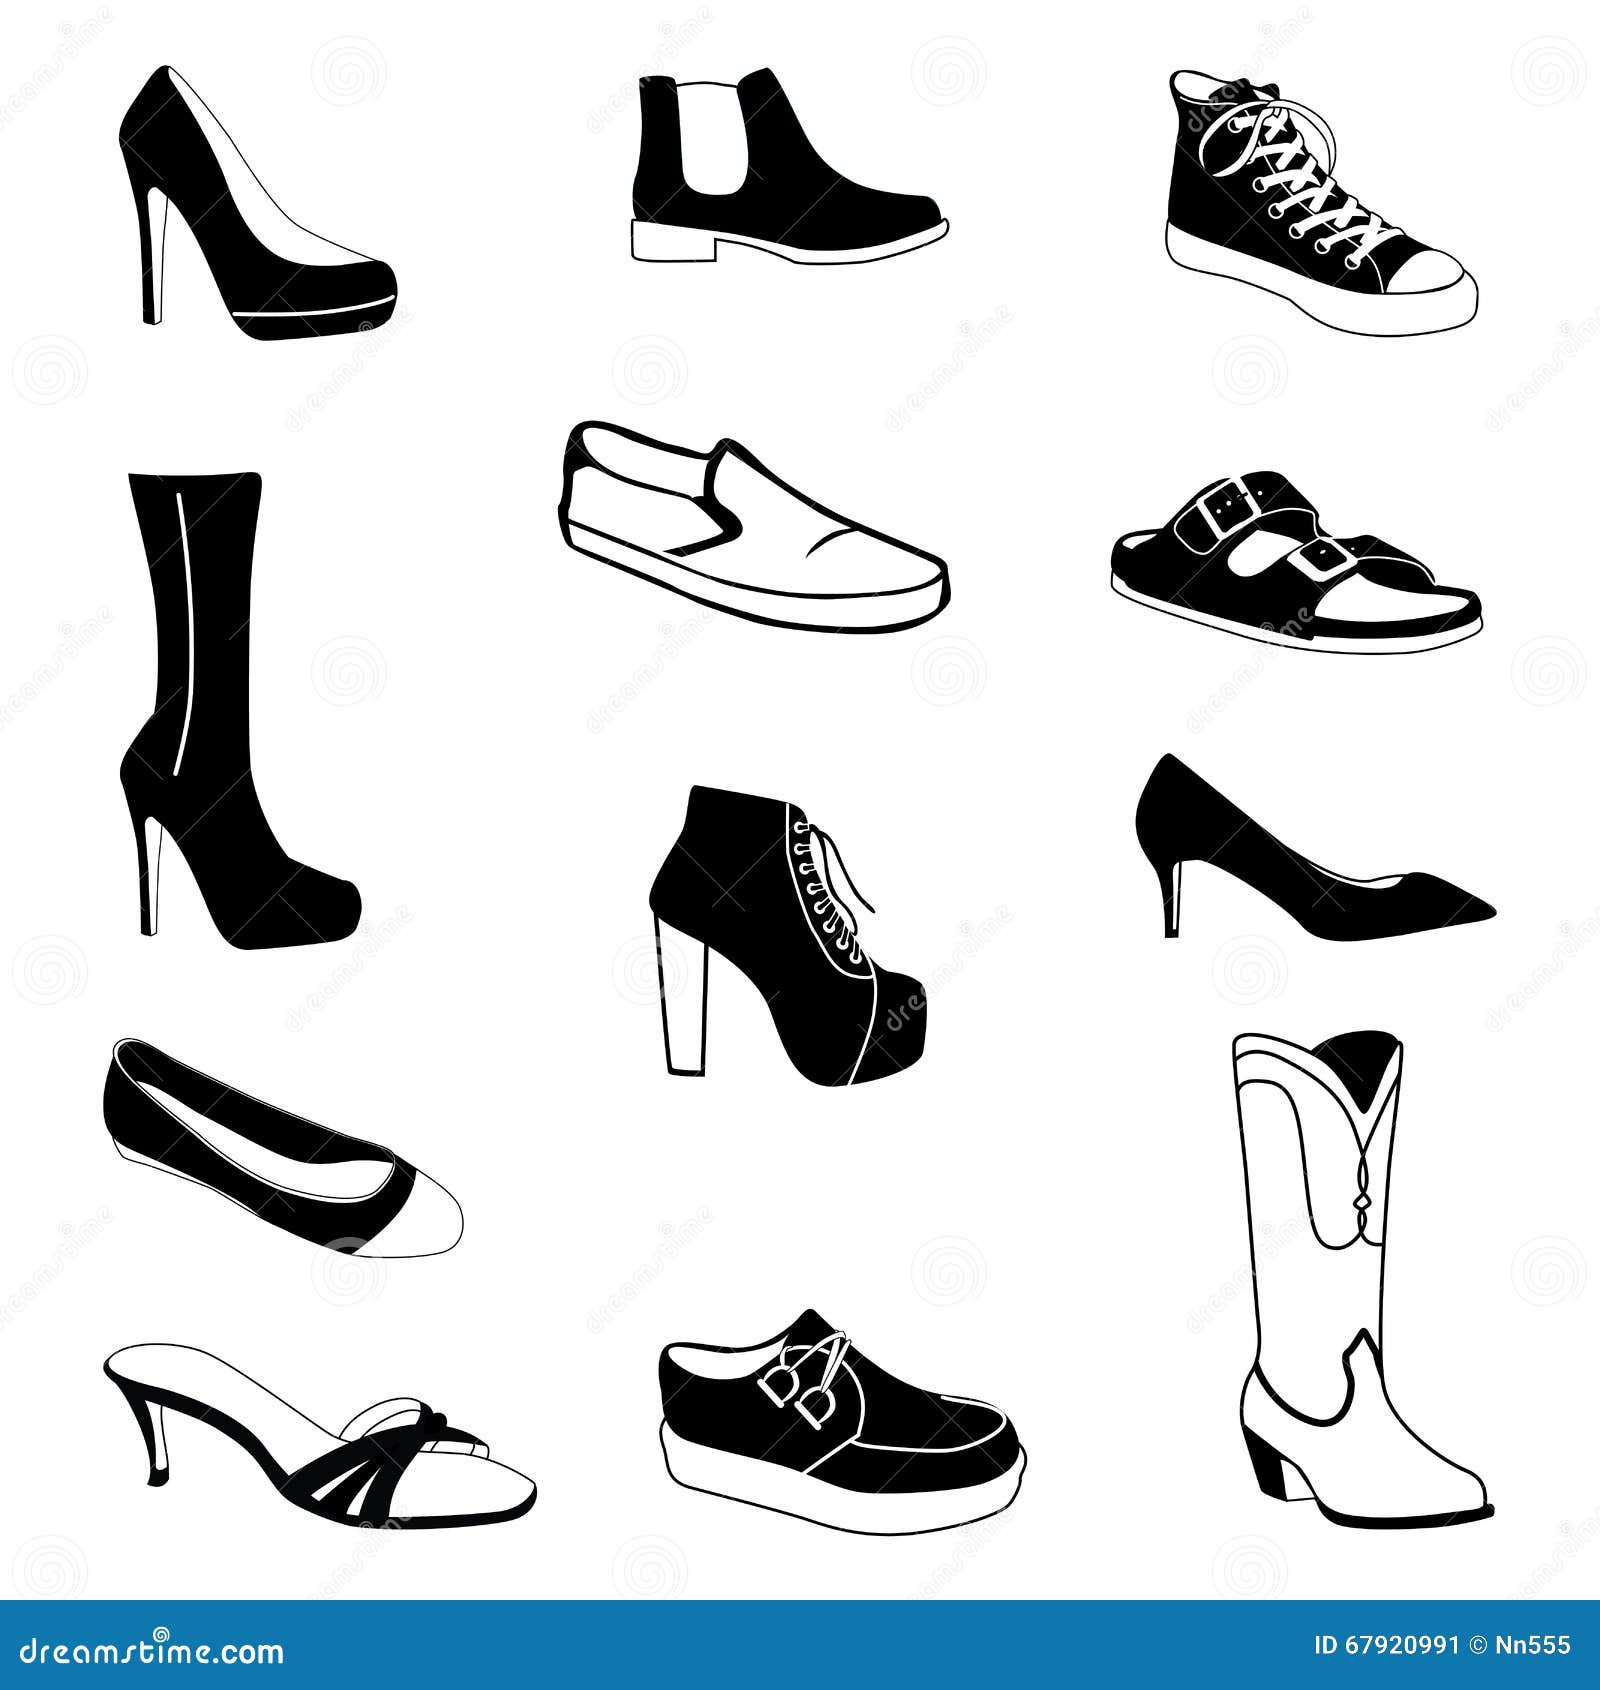 Shoes #2 stock vector. Illustration of element, season - 67920991